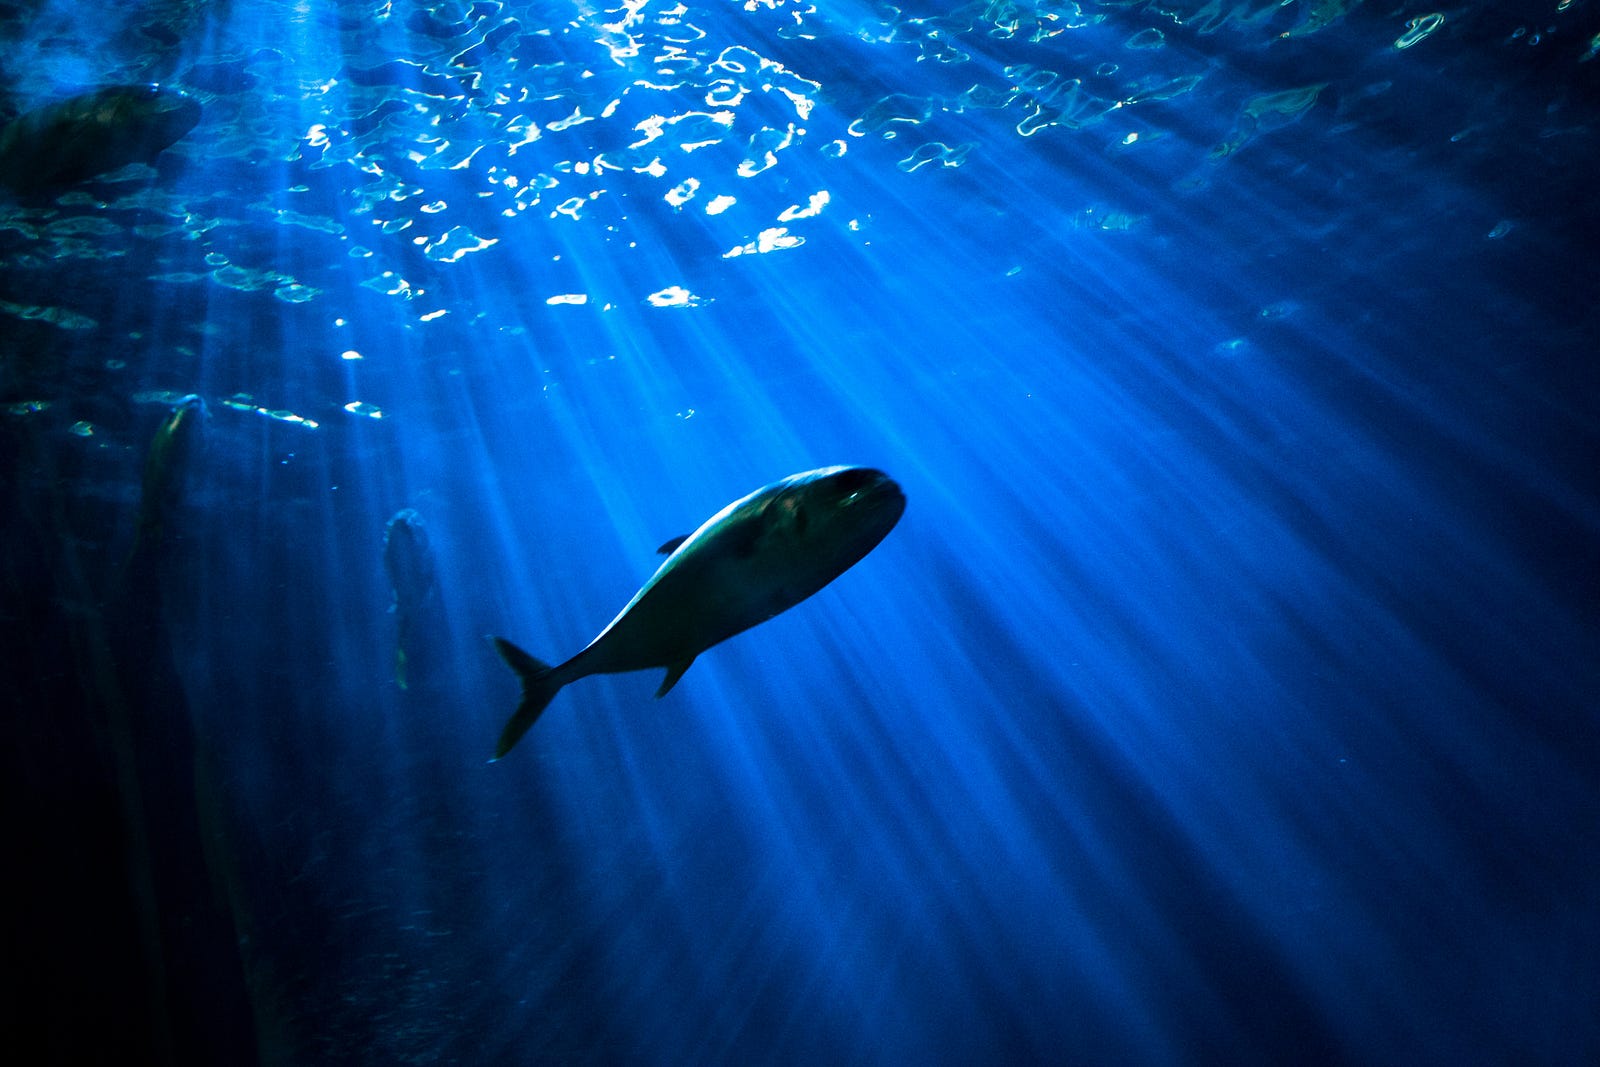 A medium-sized fish swims in the ocean.